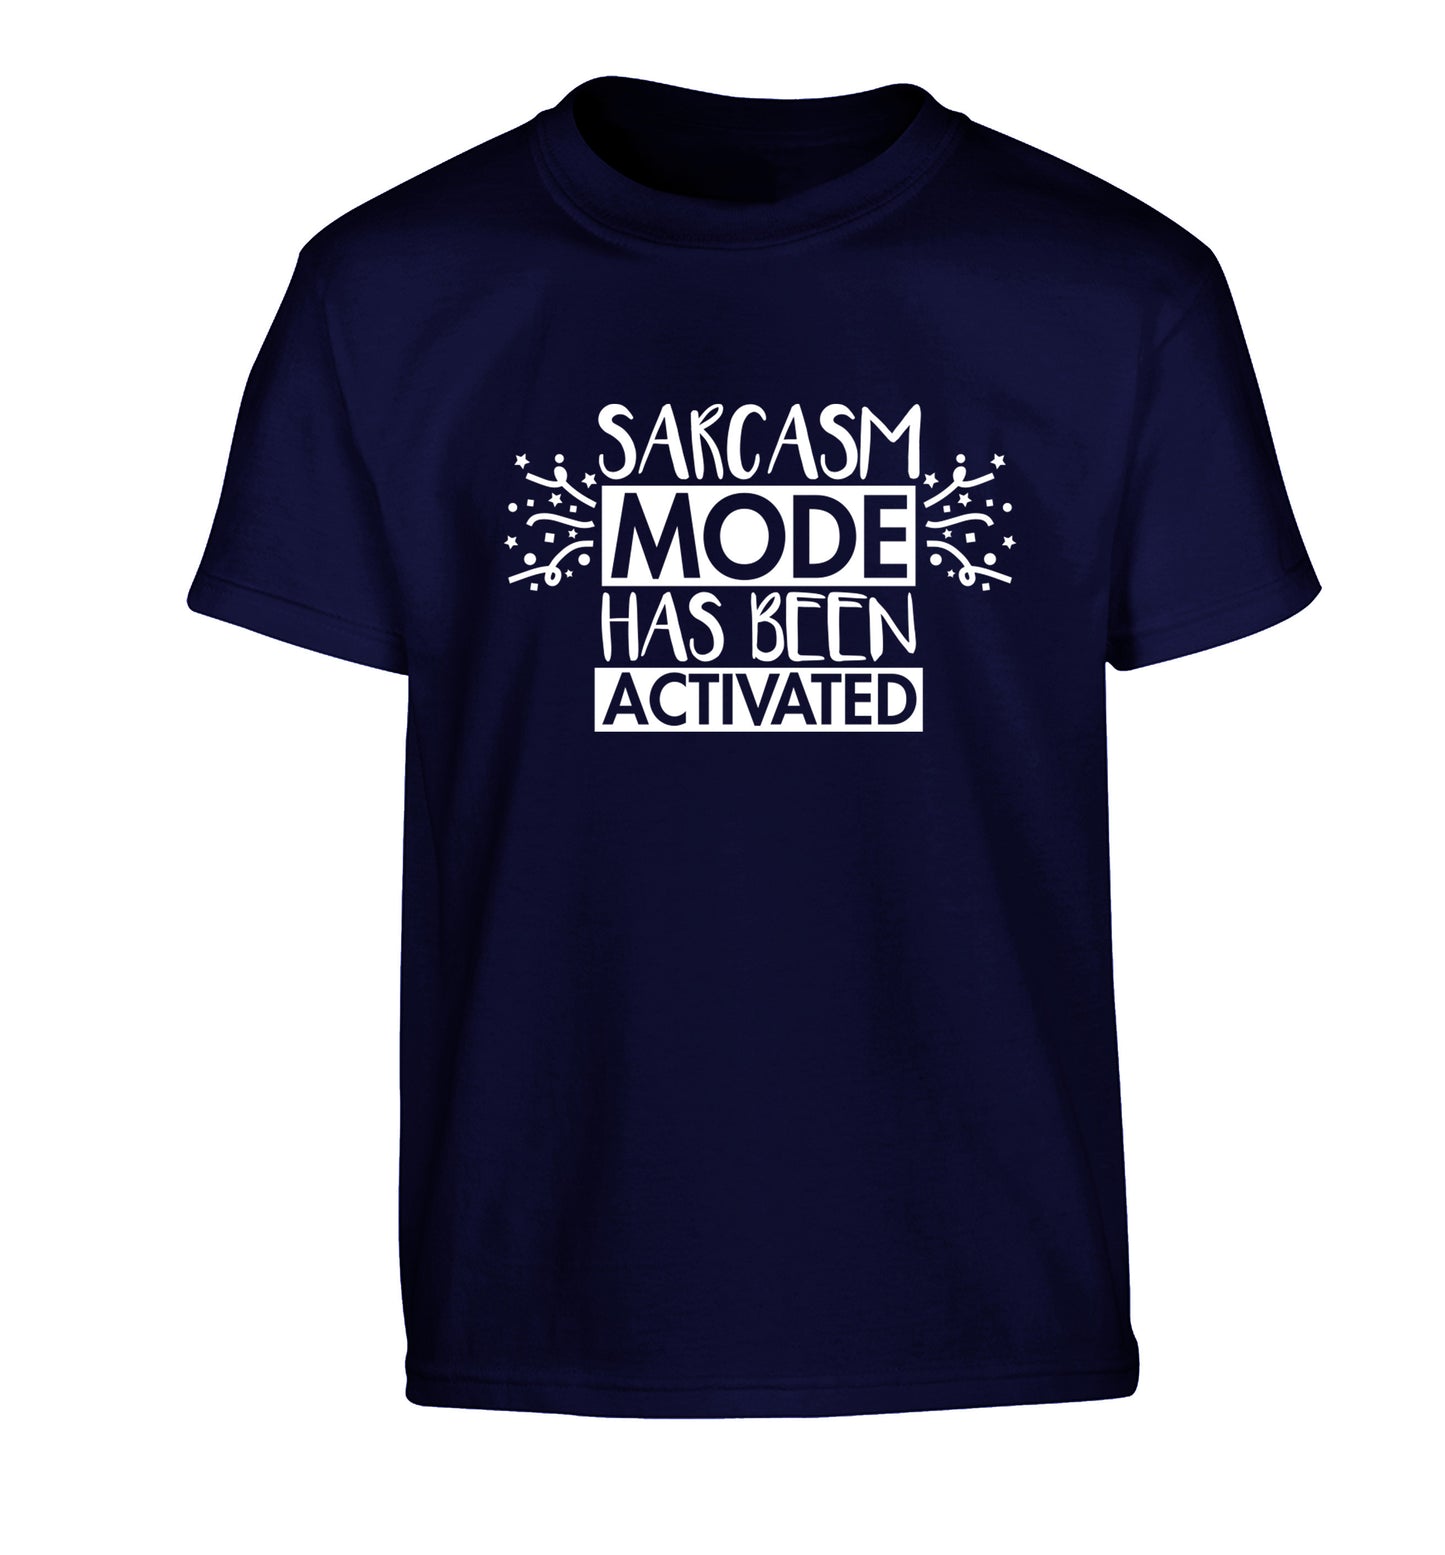 Sarcarsm mode has been activated Children's navy Tshirt 12-14 Years